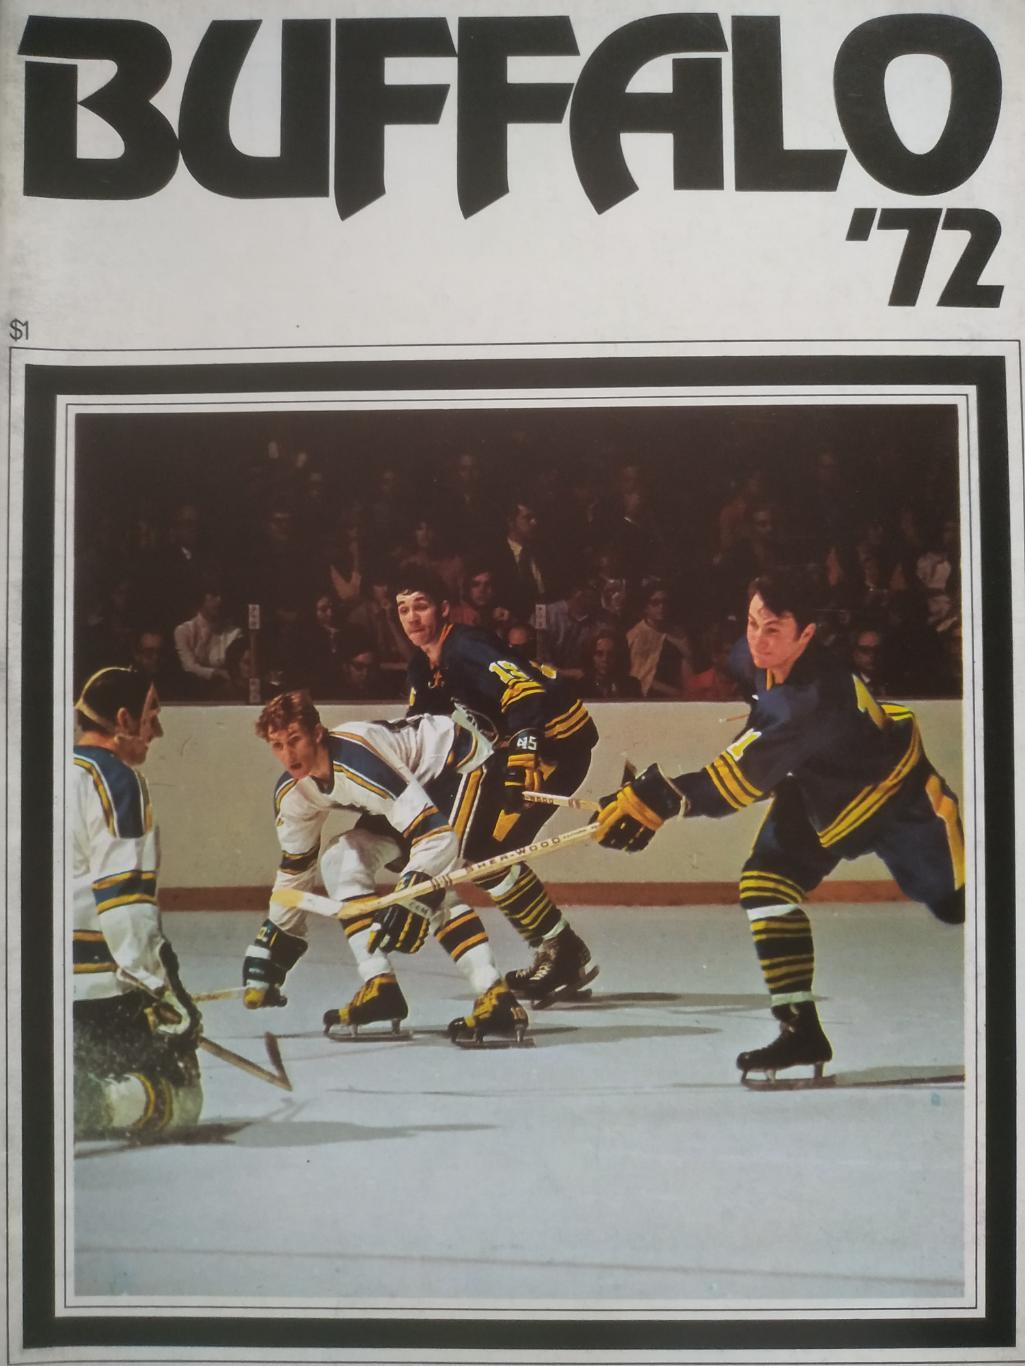 ХОККЕЙ ПРОГРАММА АЛЬБОМ БАФФАЛО НХЛ NHL 1971 OCT.16 BUFFALO PROGRAM